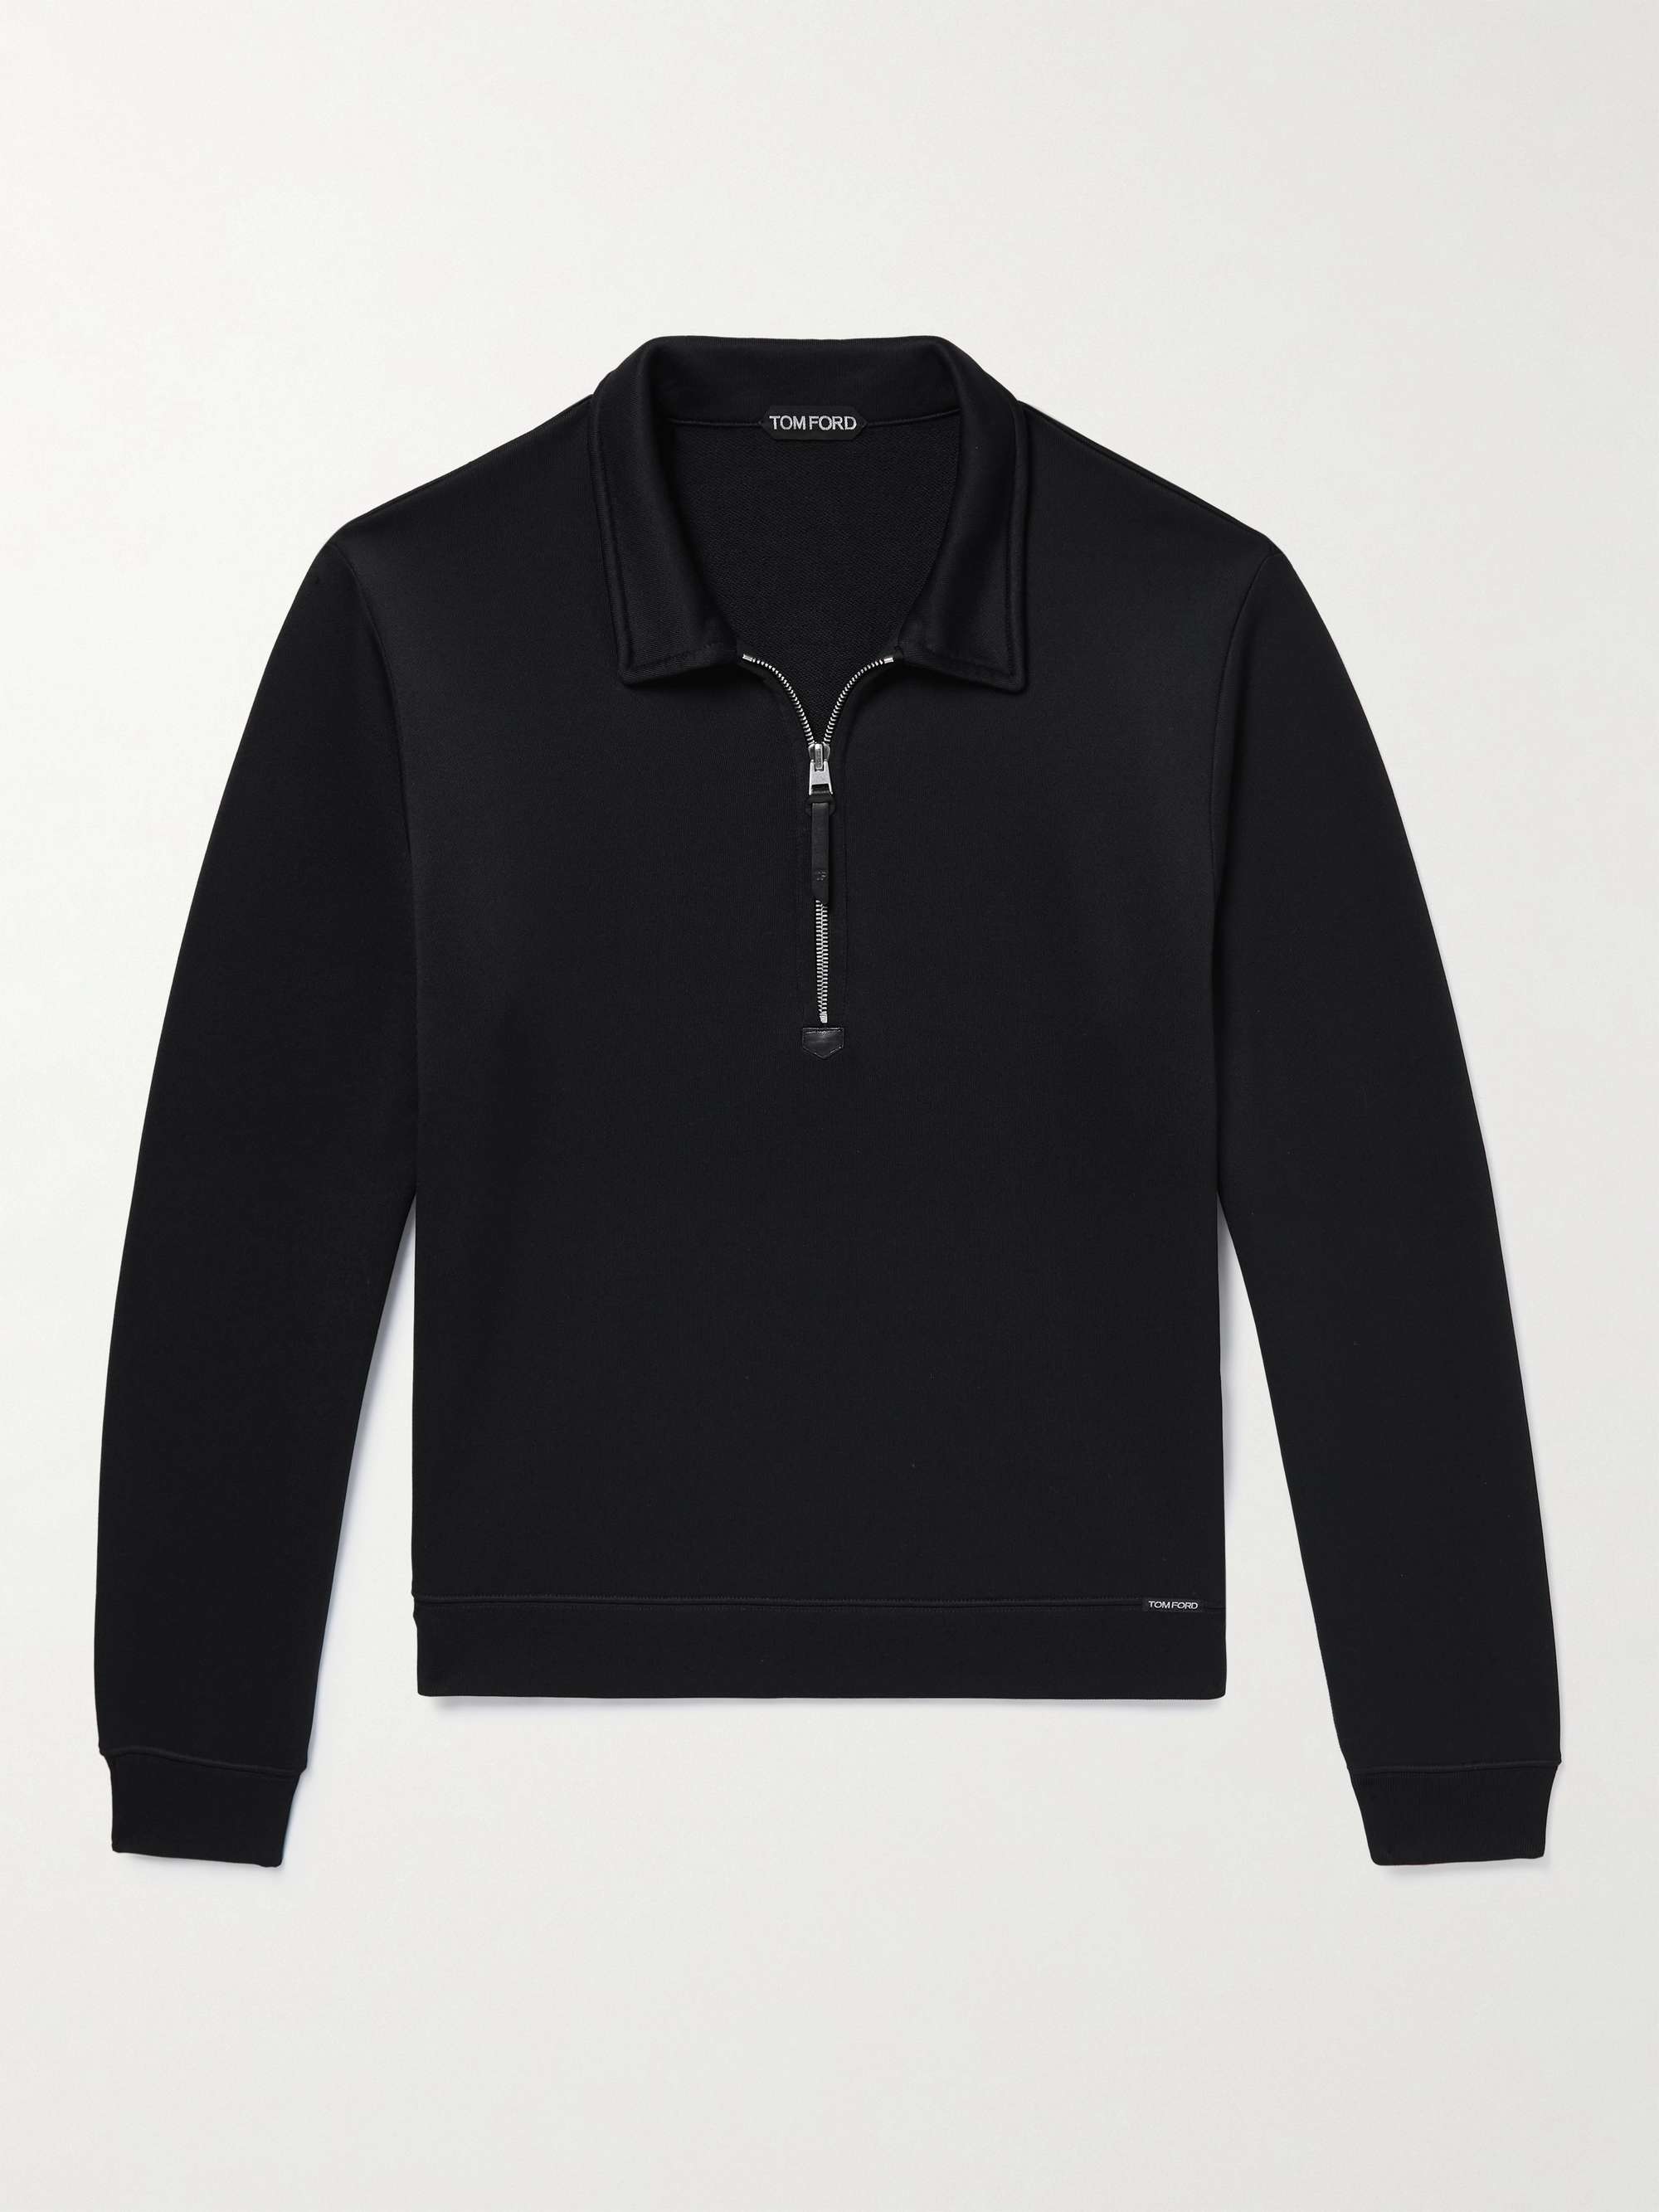 TOM FORD Slim-Fit Jersey Half-Zip Sweatshirt